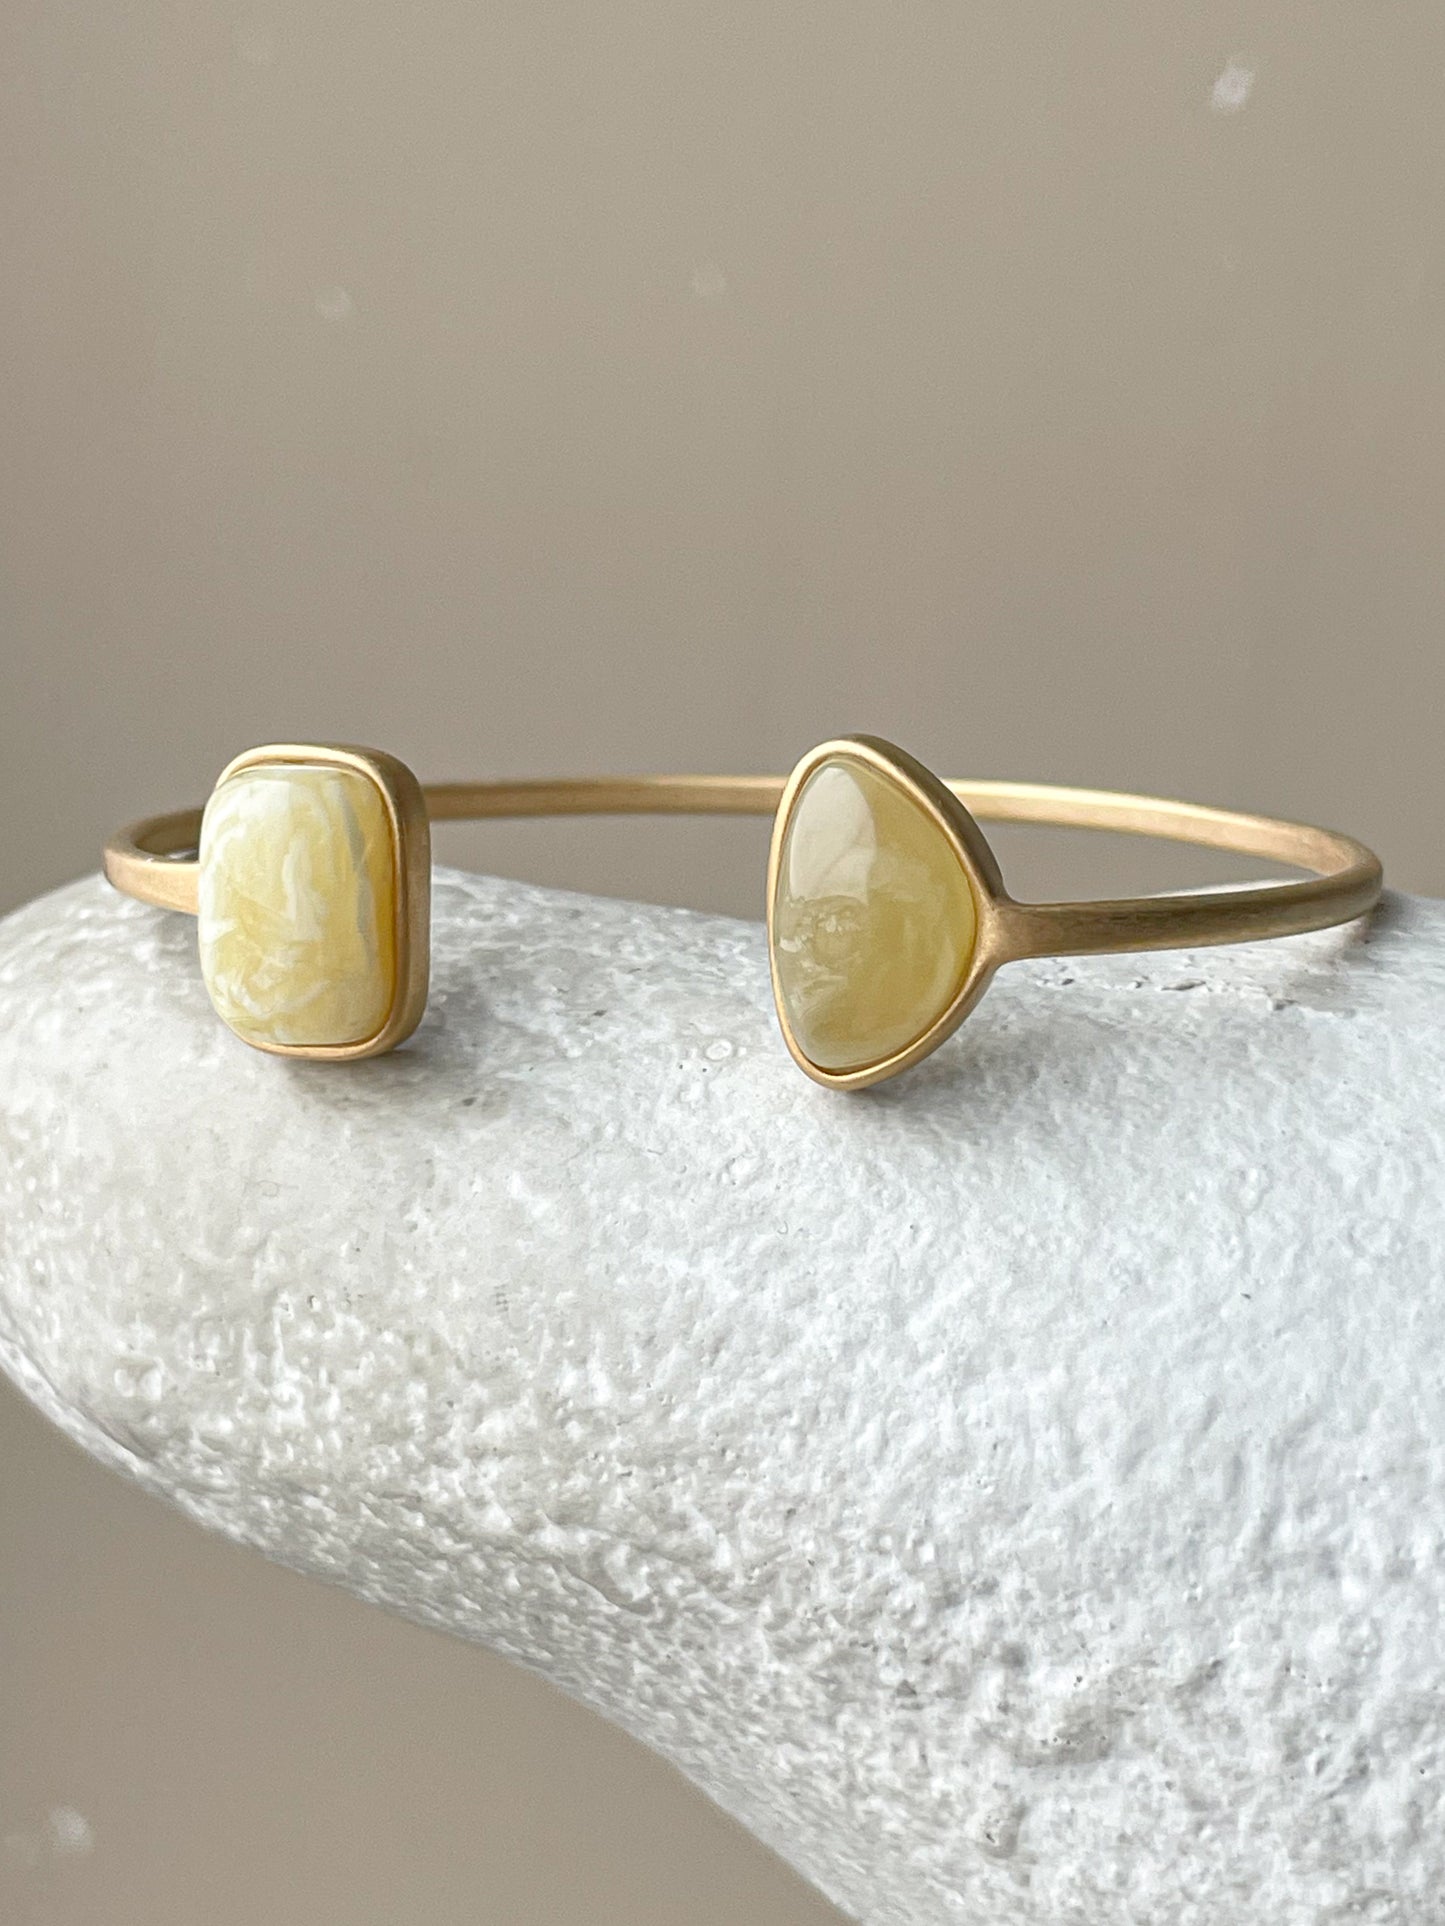 Amber bracelet - Gold plated silver - Cuff bracelet collection - Size 6.5